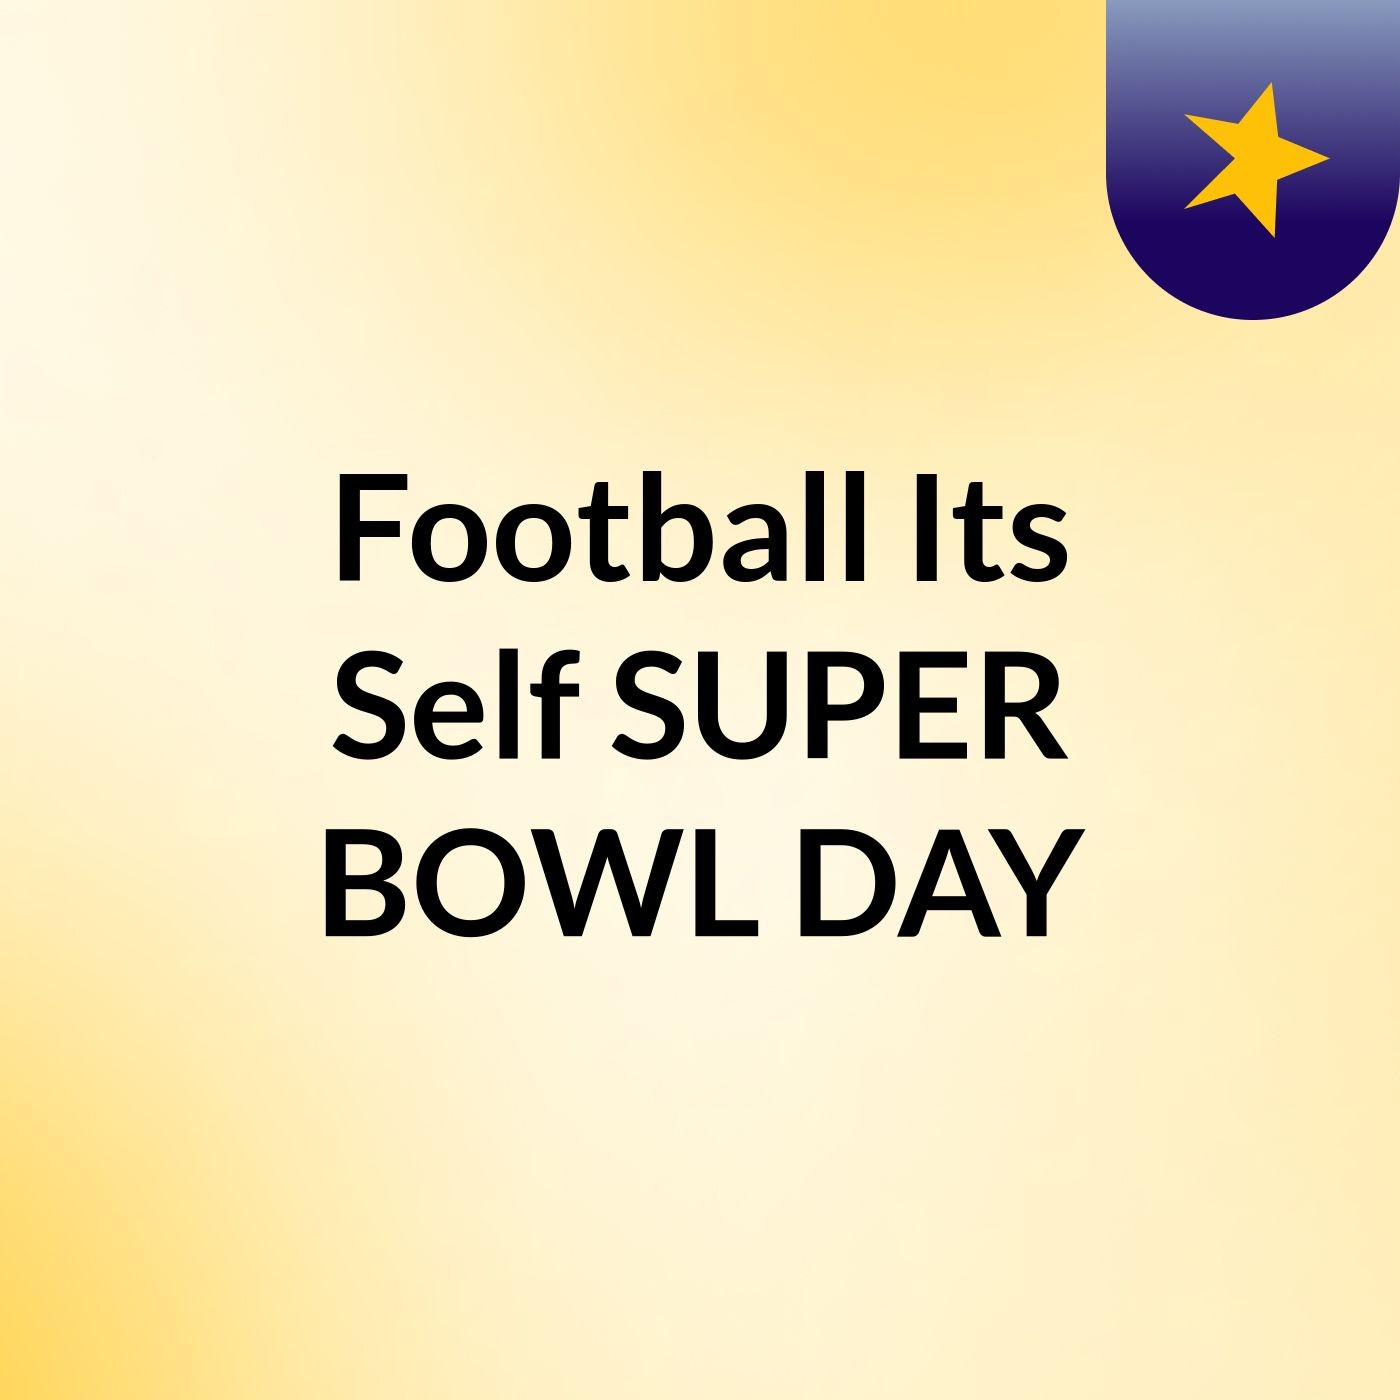 Football Its Self SUPER BOWL DAY